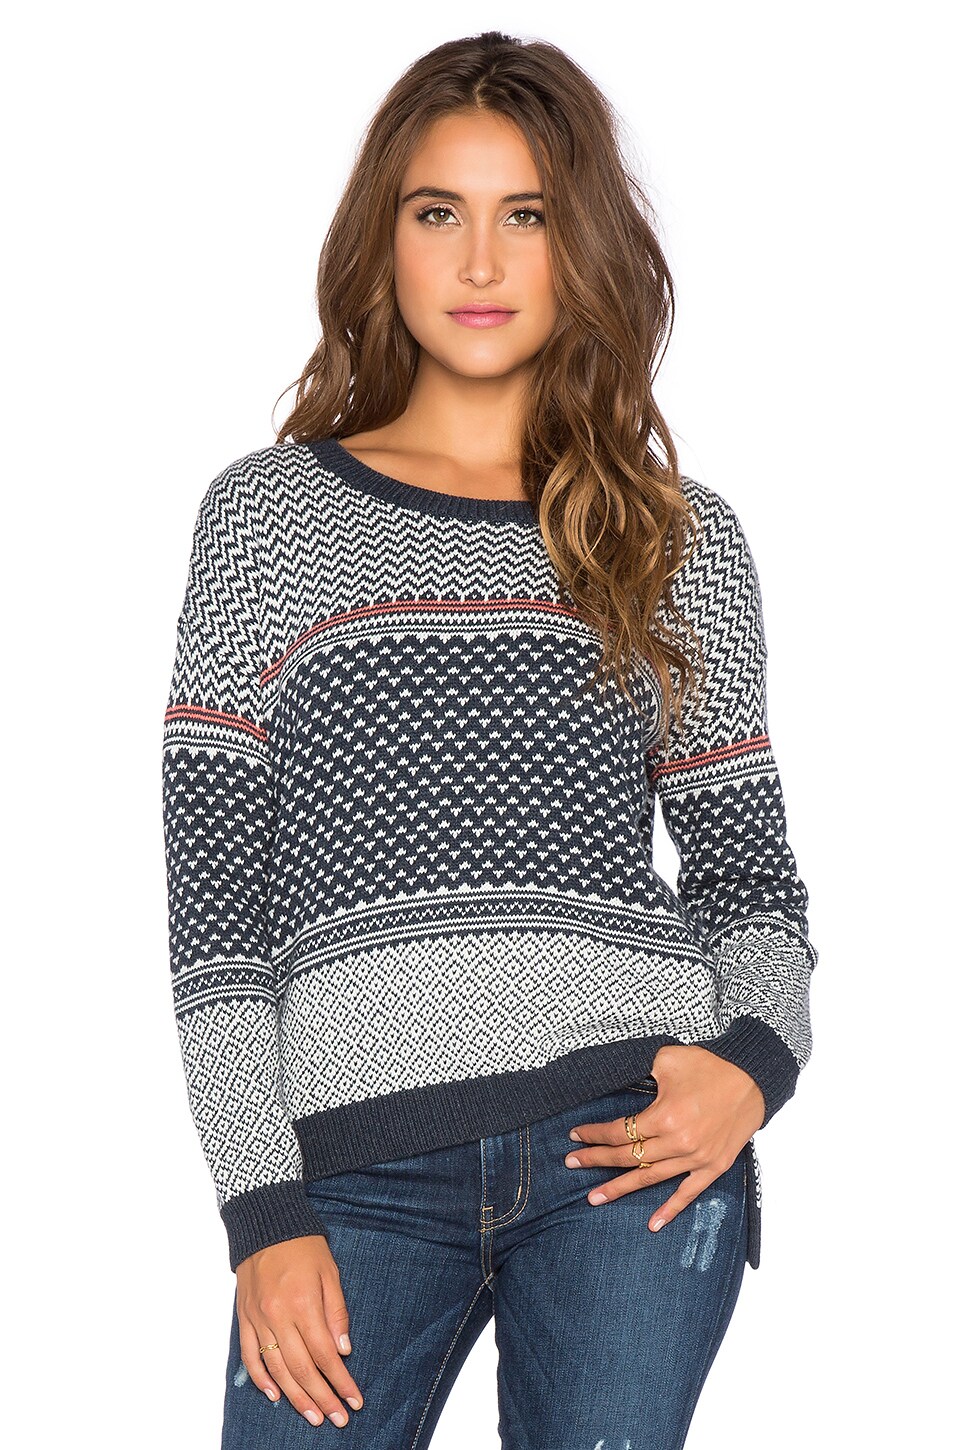 Yerse Sweater in Dido | REVOLVE